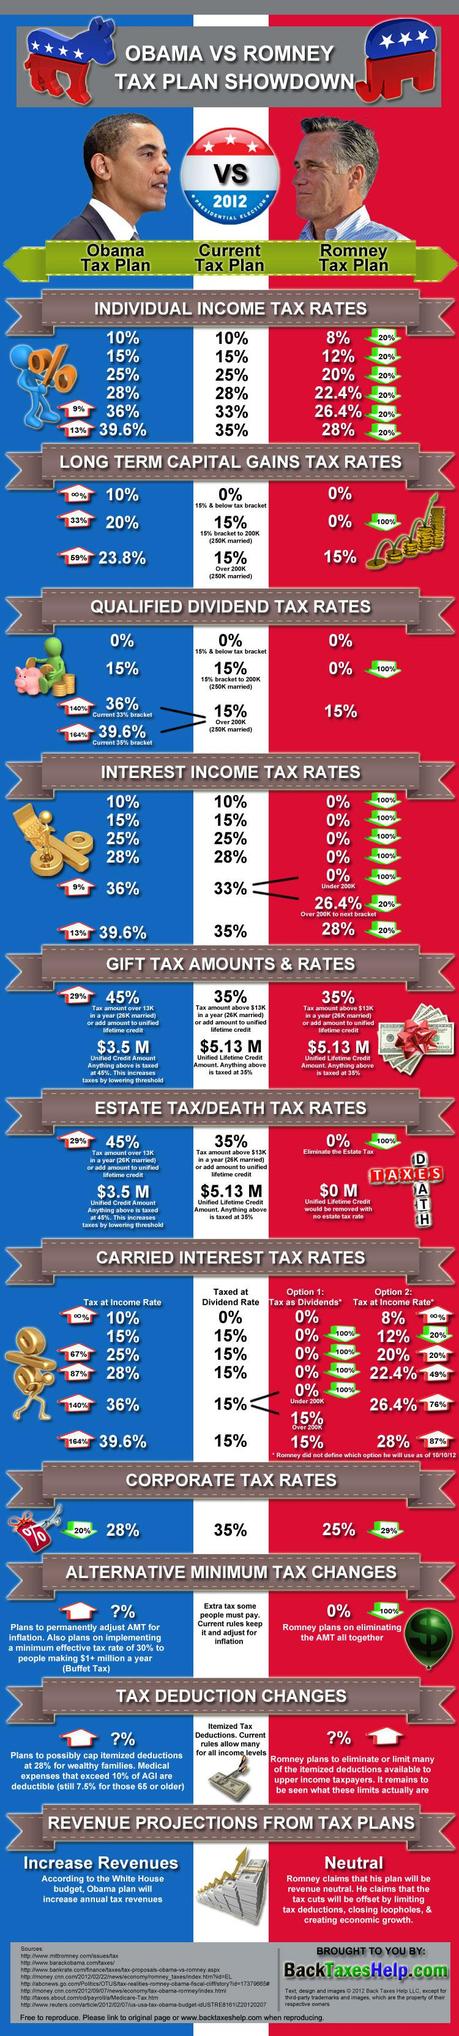 Romney vs Obama Tax Plan Comparison Infographic